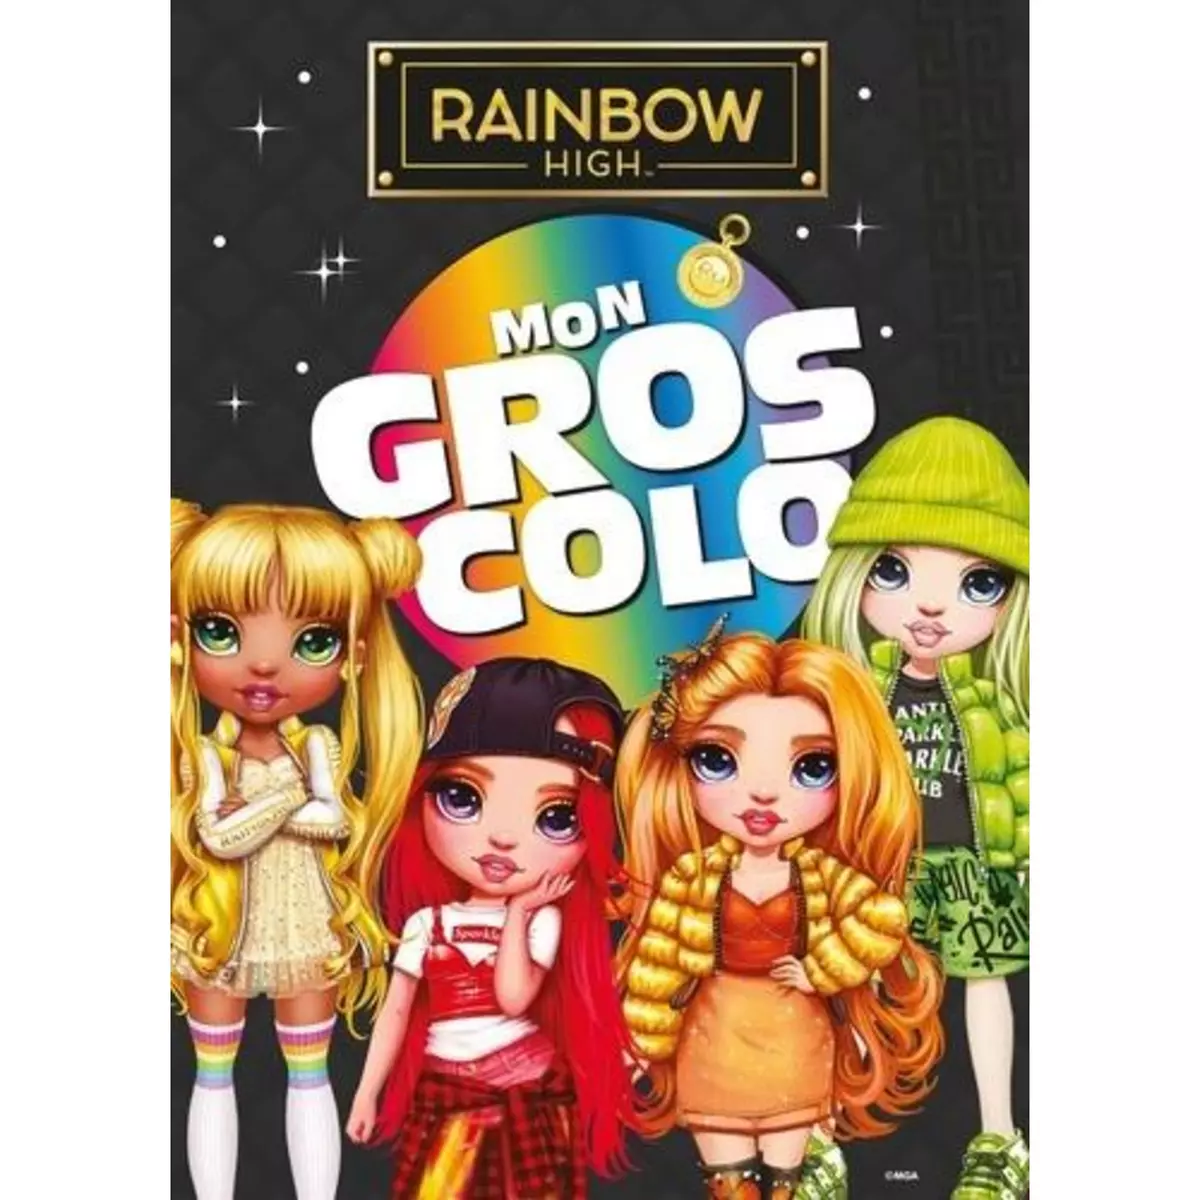  MON GROS COLO RAINBOW HIGH, Hachette Jeunesse